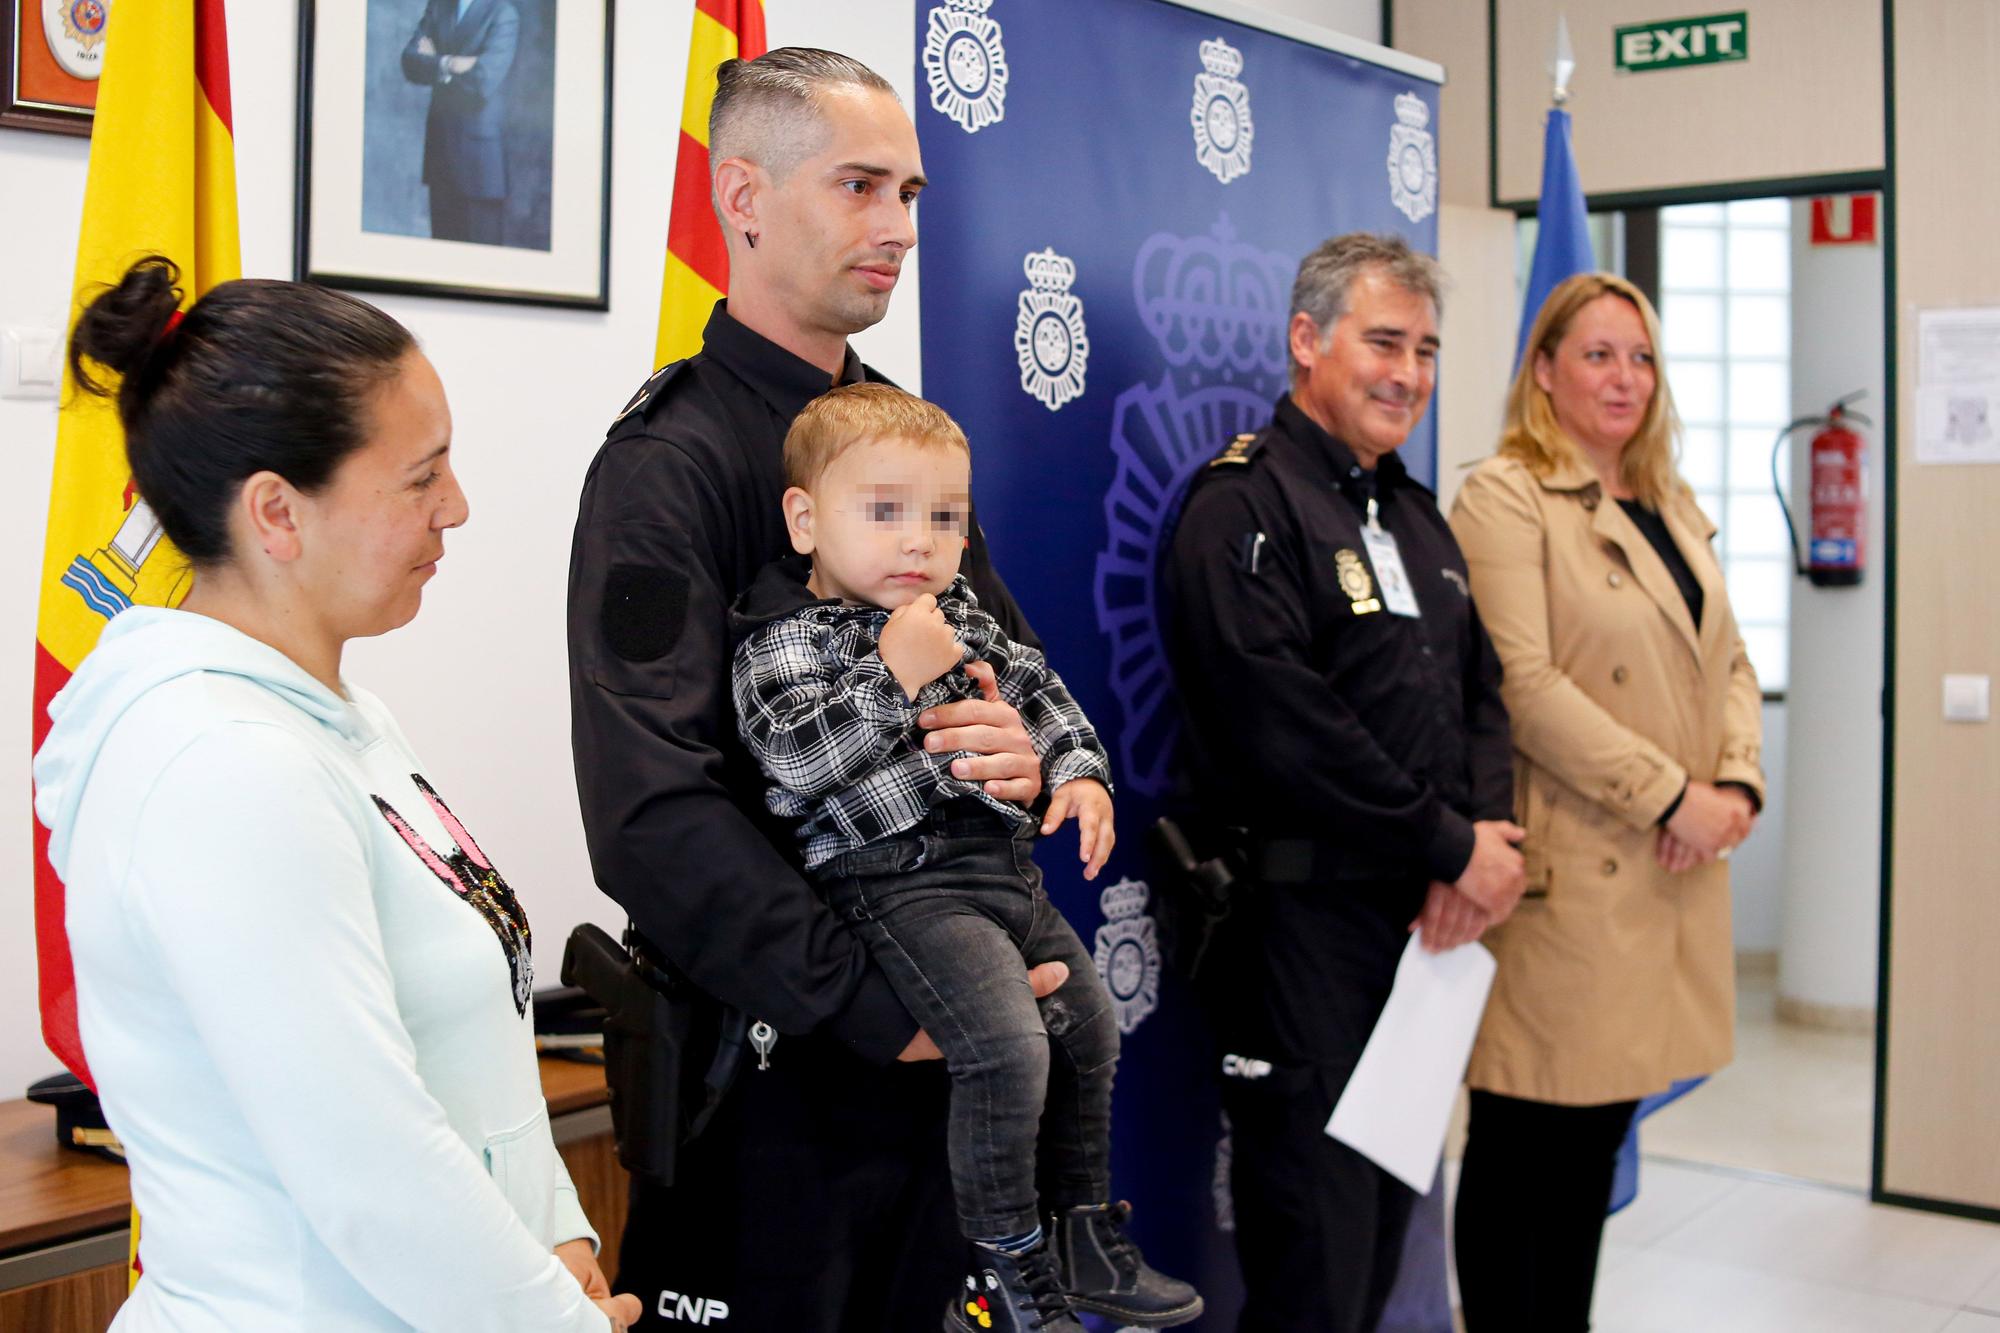 Un policía salva a un bebé en Ibiza